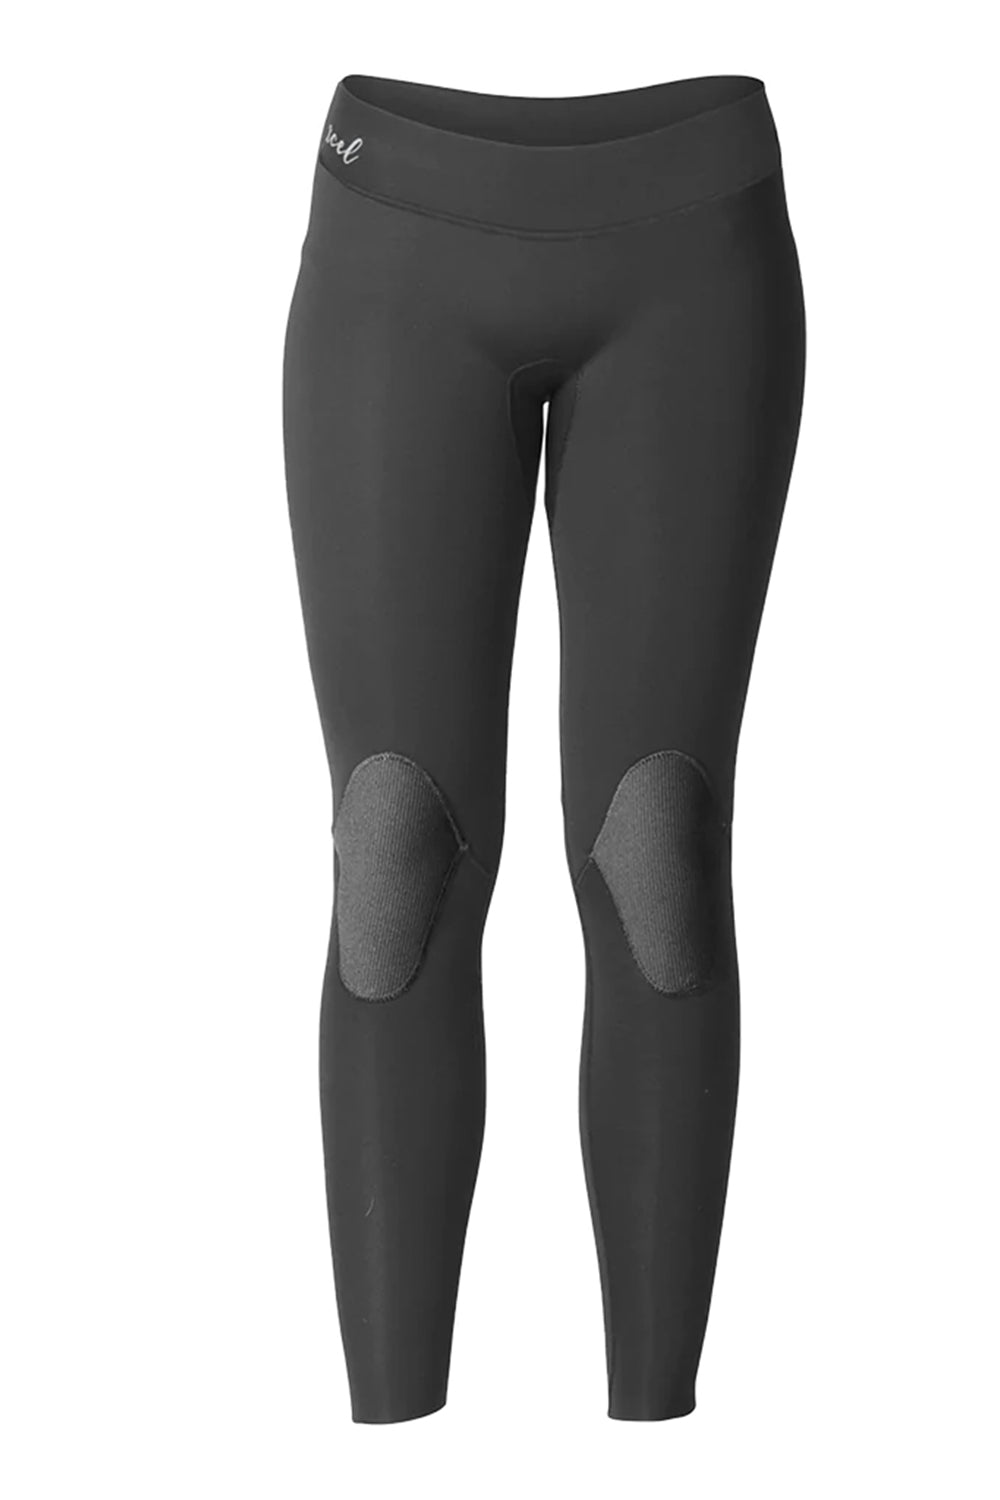 XCEL Wetsuits Australia | Women's AXIS 2mm Neoprene Pant